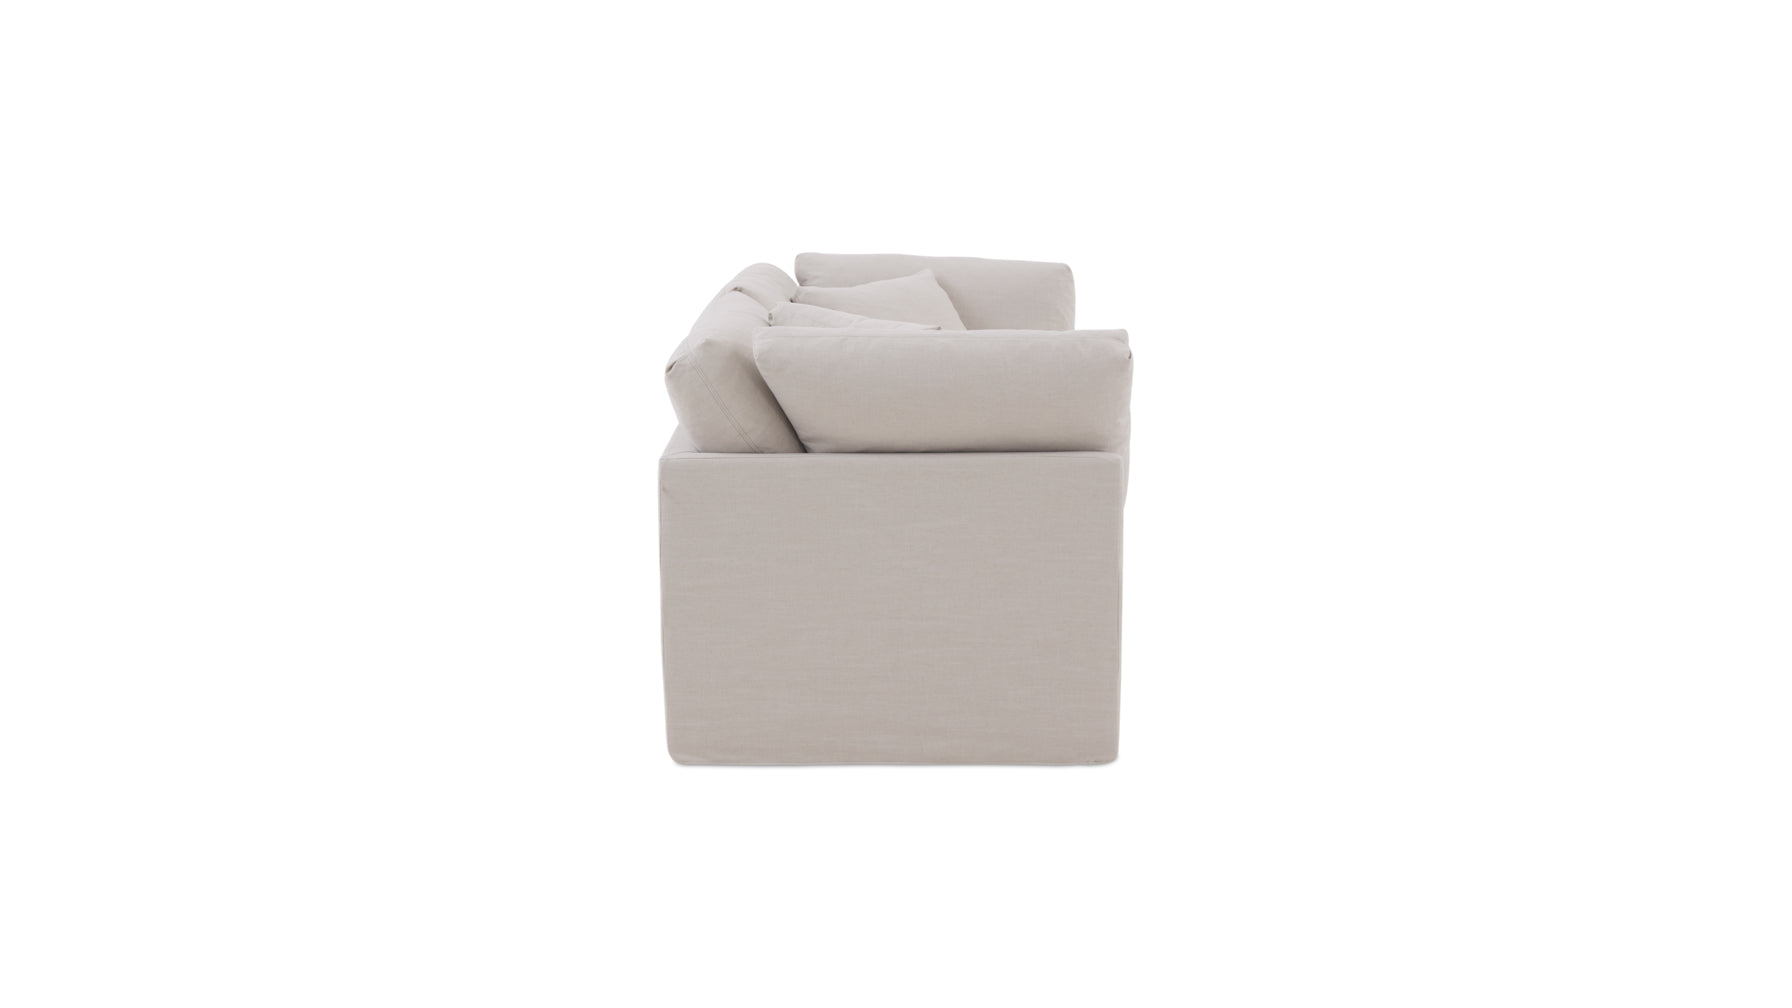 Get Together™ 2-Piece Modular Sofa, Standard, Clay - Image 6